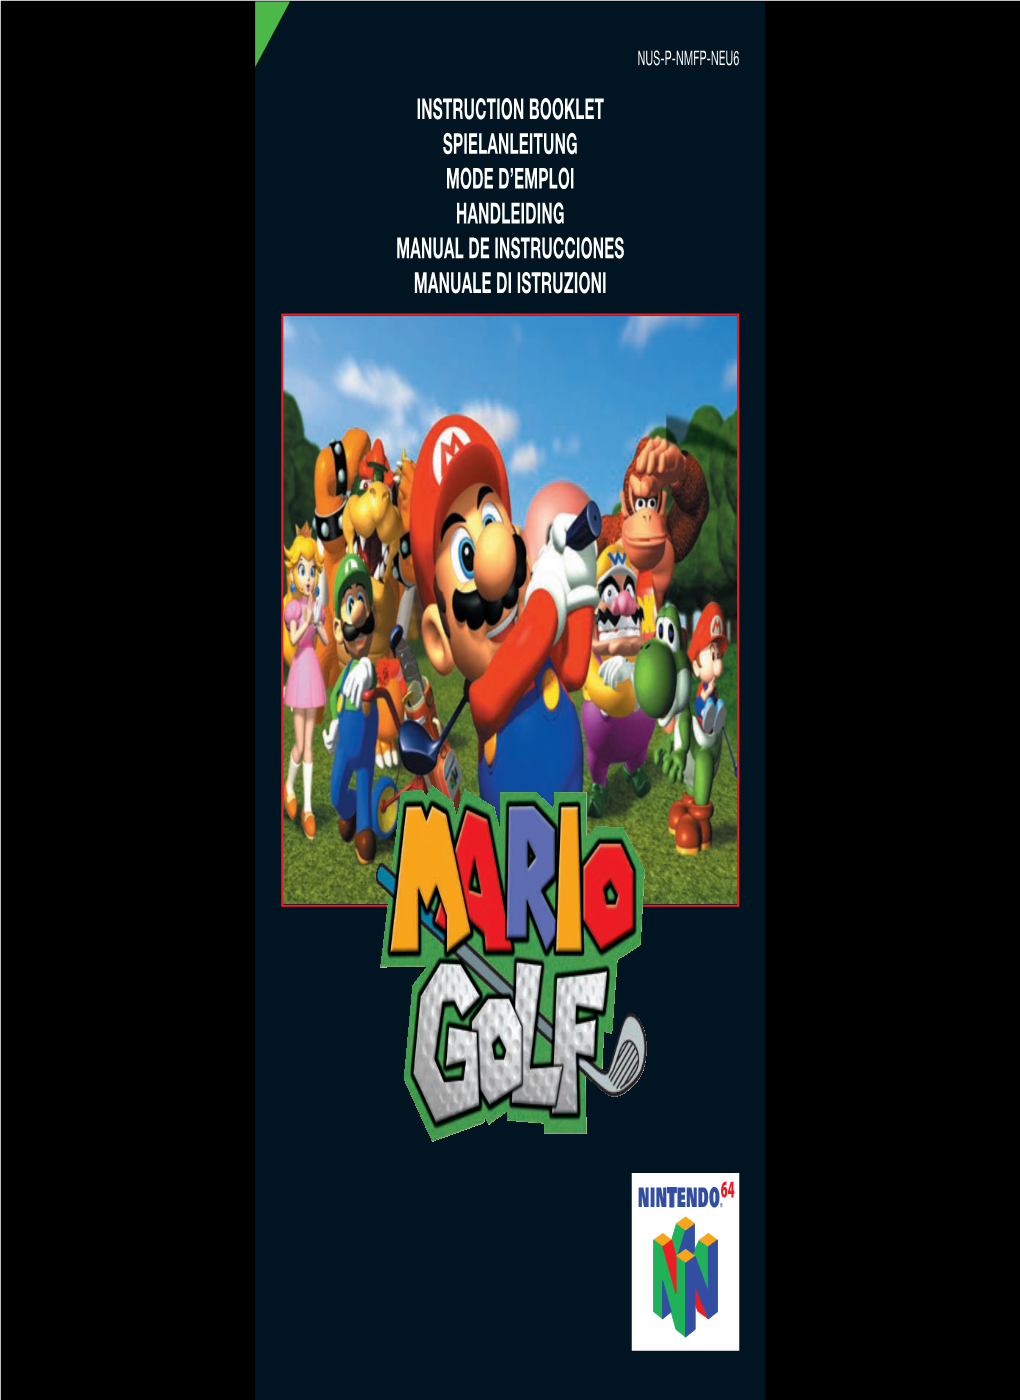 MARIO GOLF™ Game Pak for the Nintendo® System